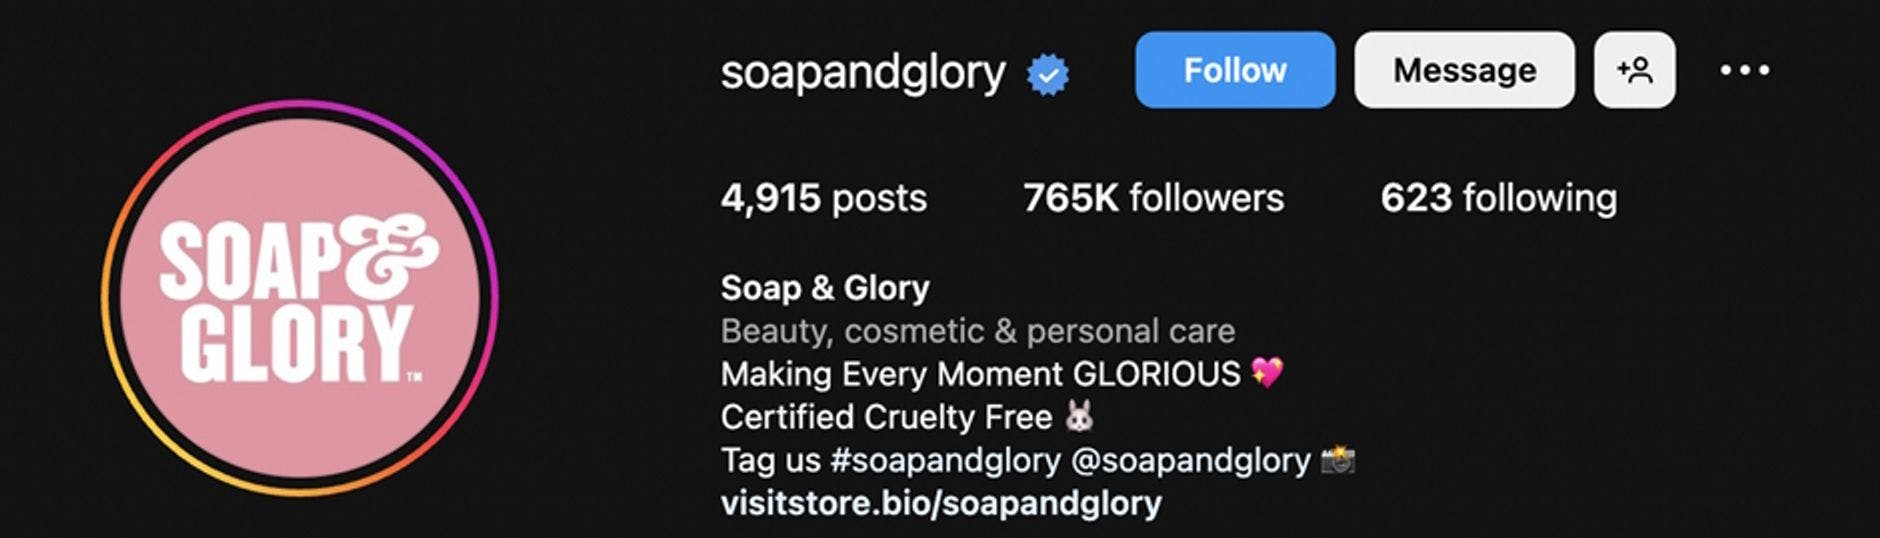 Instagram Bio Ideas - soapandglory example